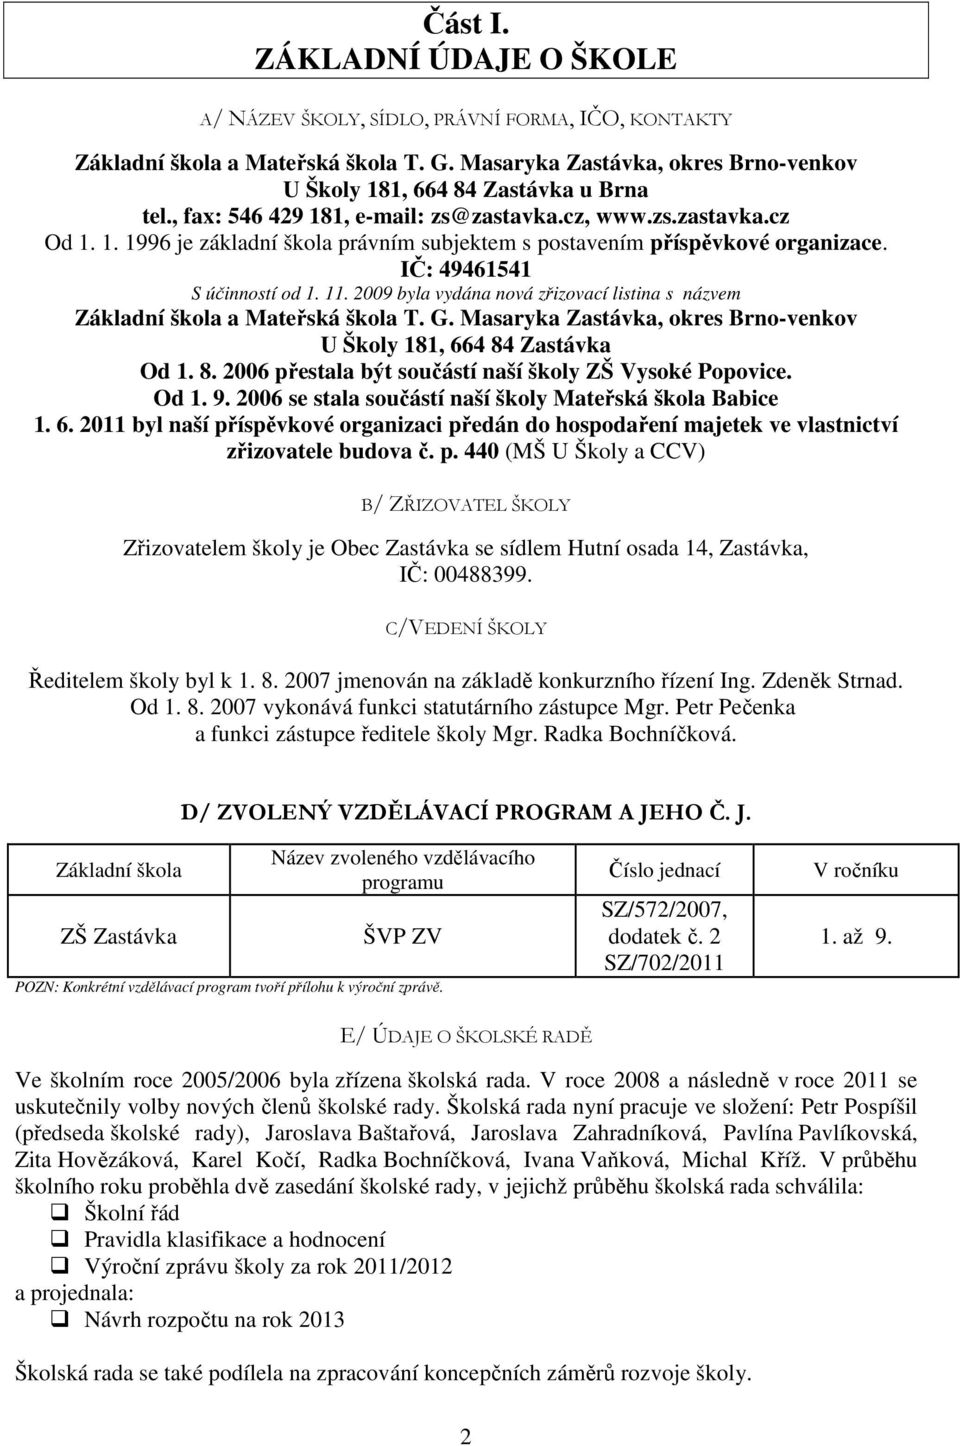 2009 byla vydána nová zřizovací listina s názvem Základní škola a Mateřská škola T. G. Masaryka Zastávka, okres Brno-venkov U Školy 181, 664 84